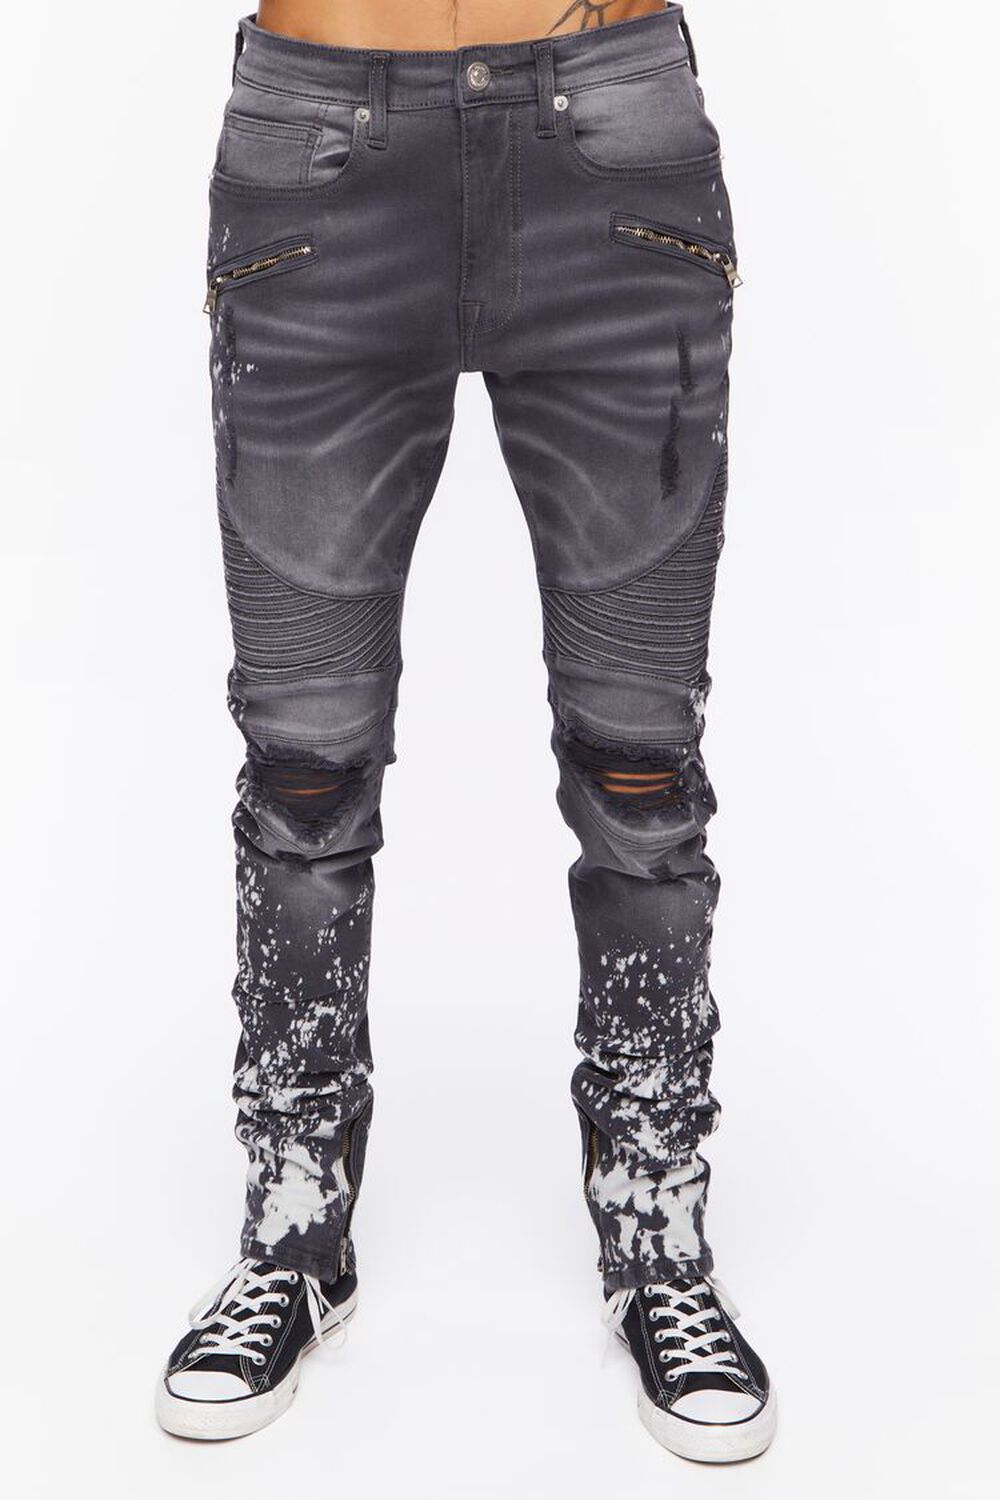 GREY/MULTI Distressed Paint Splatter Skinny Jeans, image 1